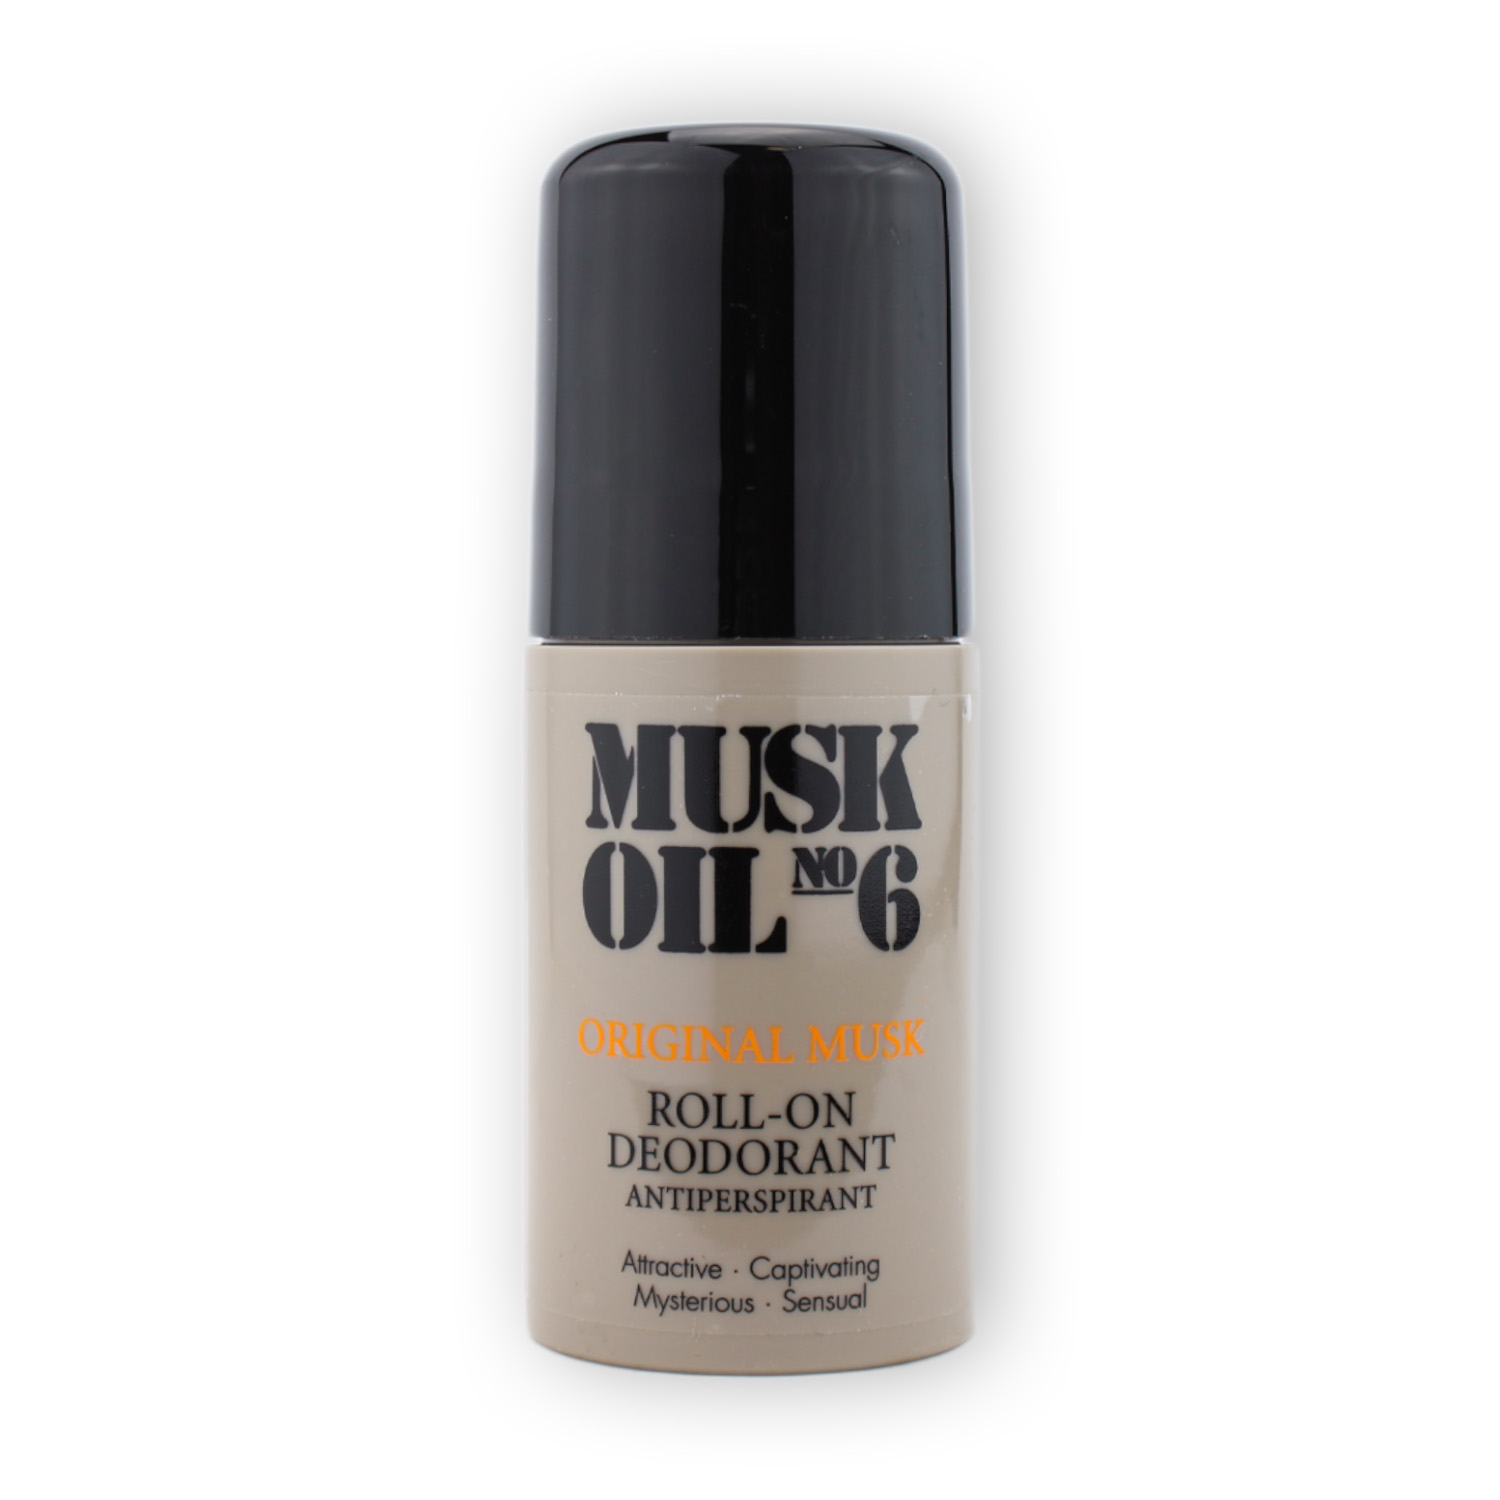 Gosh Copenhagen Musk Oil No.6 Deodorant Roll-On 75ml